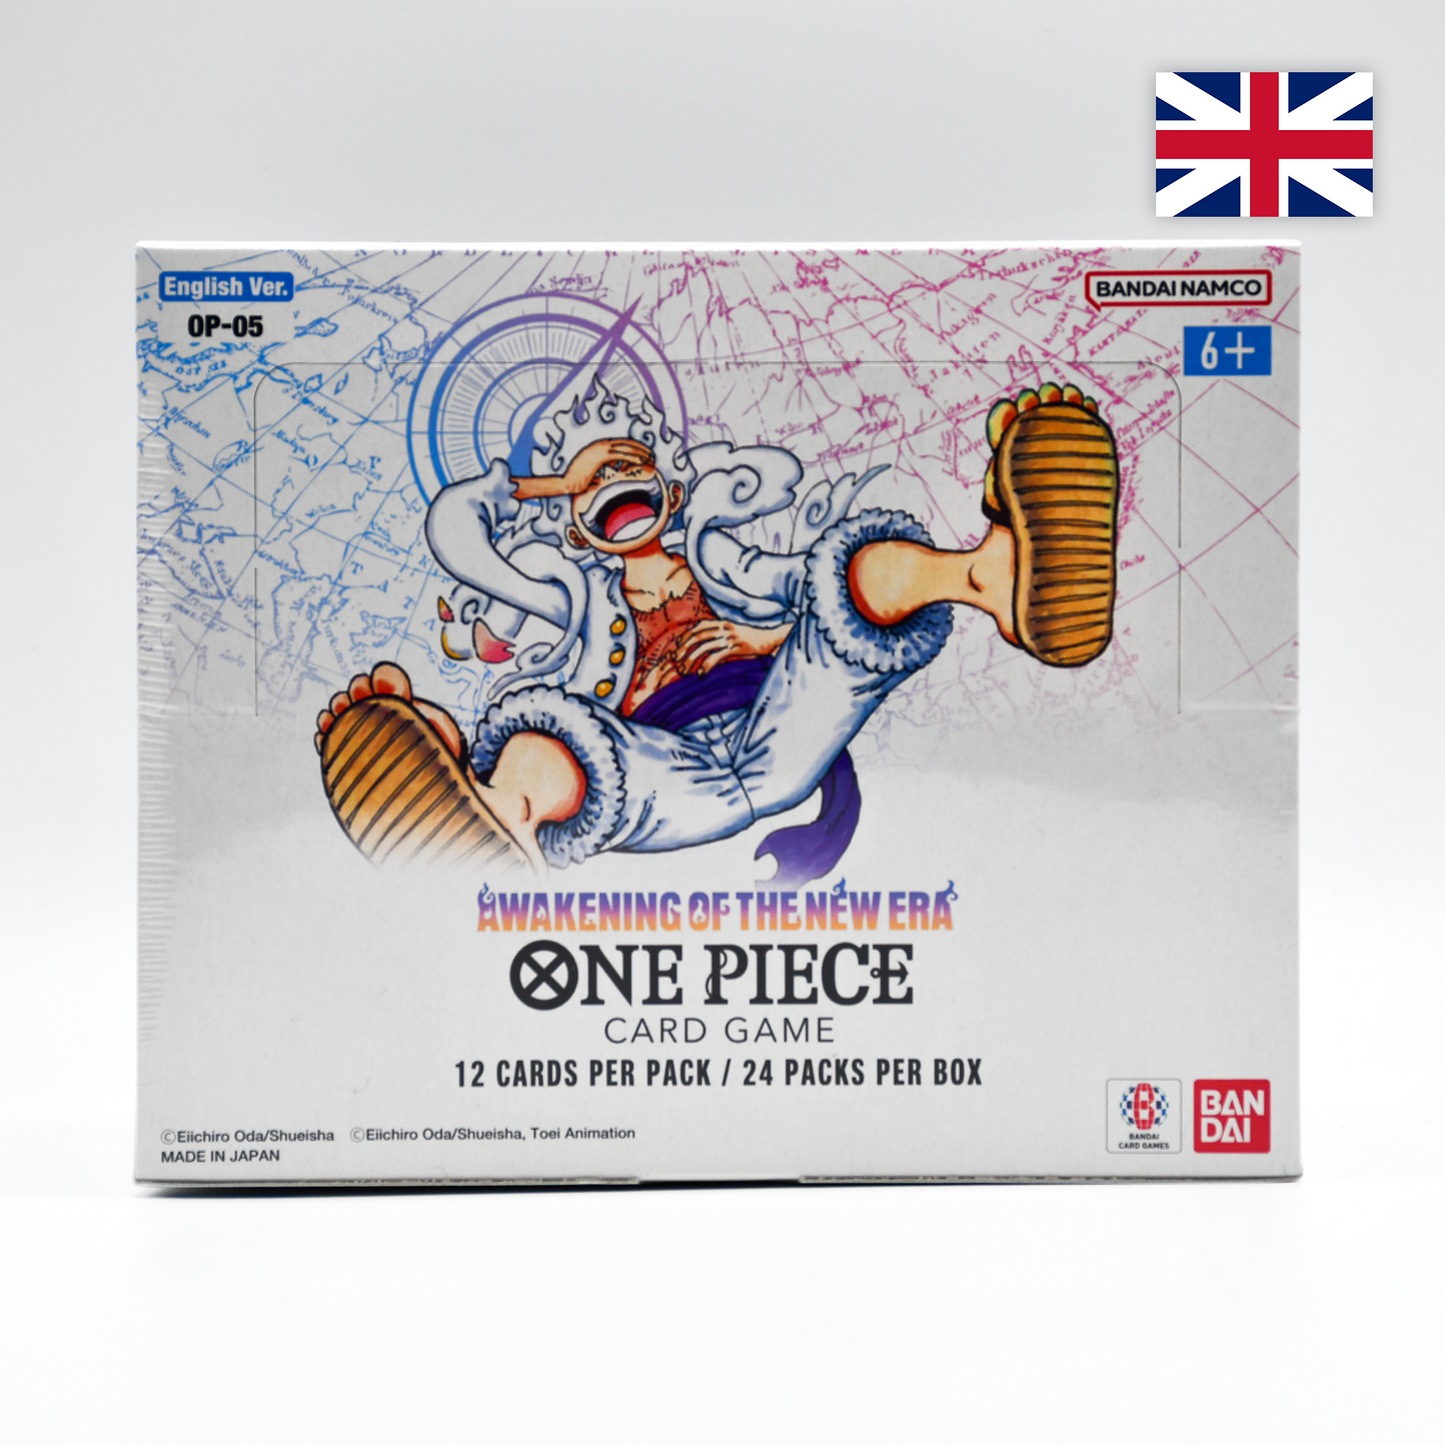 One Piece Card Game - Awakening of the New Era Display (OP-05) (Englisch)